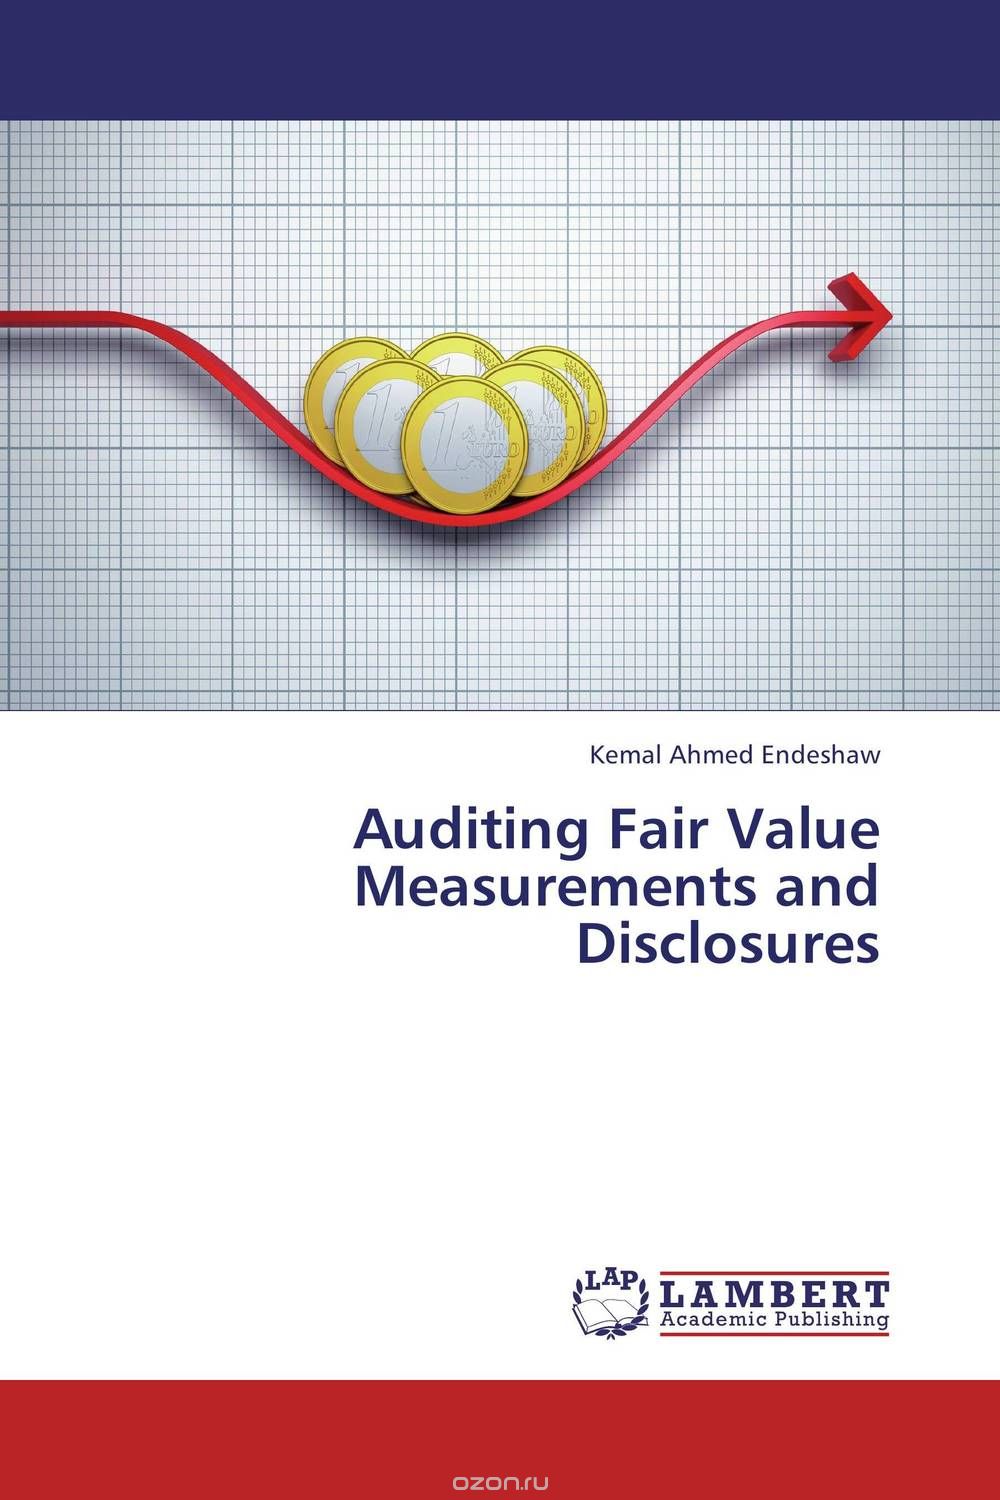 Скачать книгу "Auditing Fair Value Measurements and Disclosures"